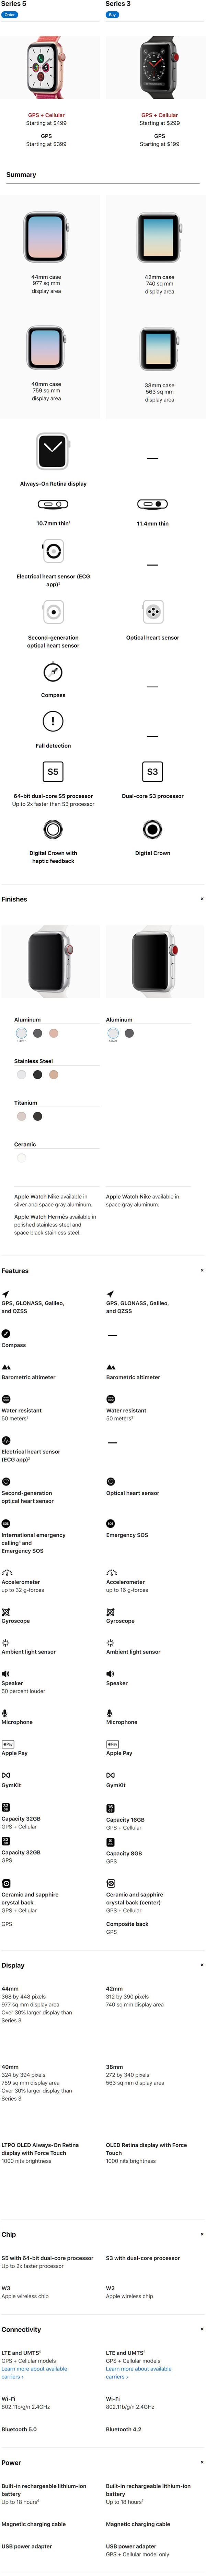 Apple Watch Series 5 Vs Series 4 Vs Series 3 Specs Comparison